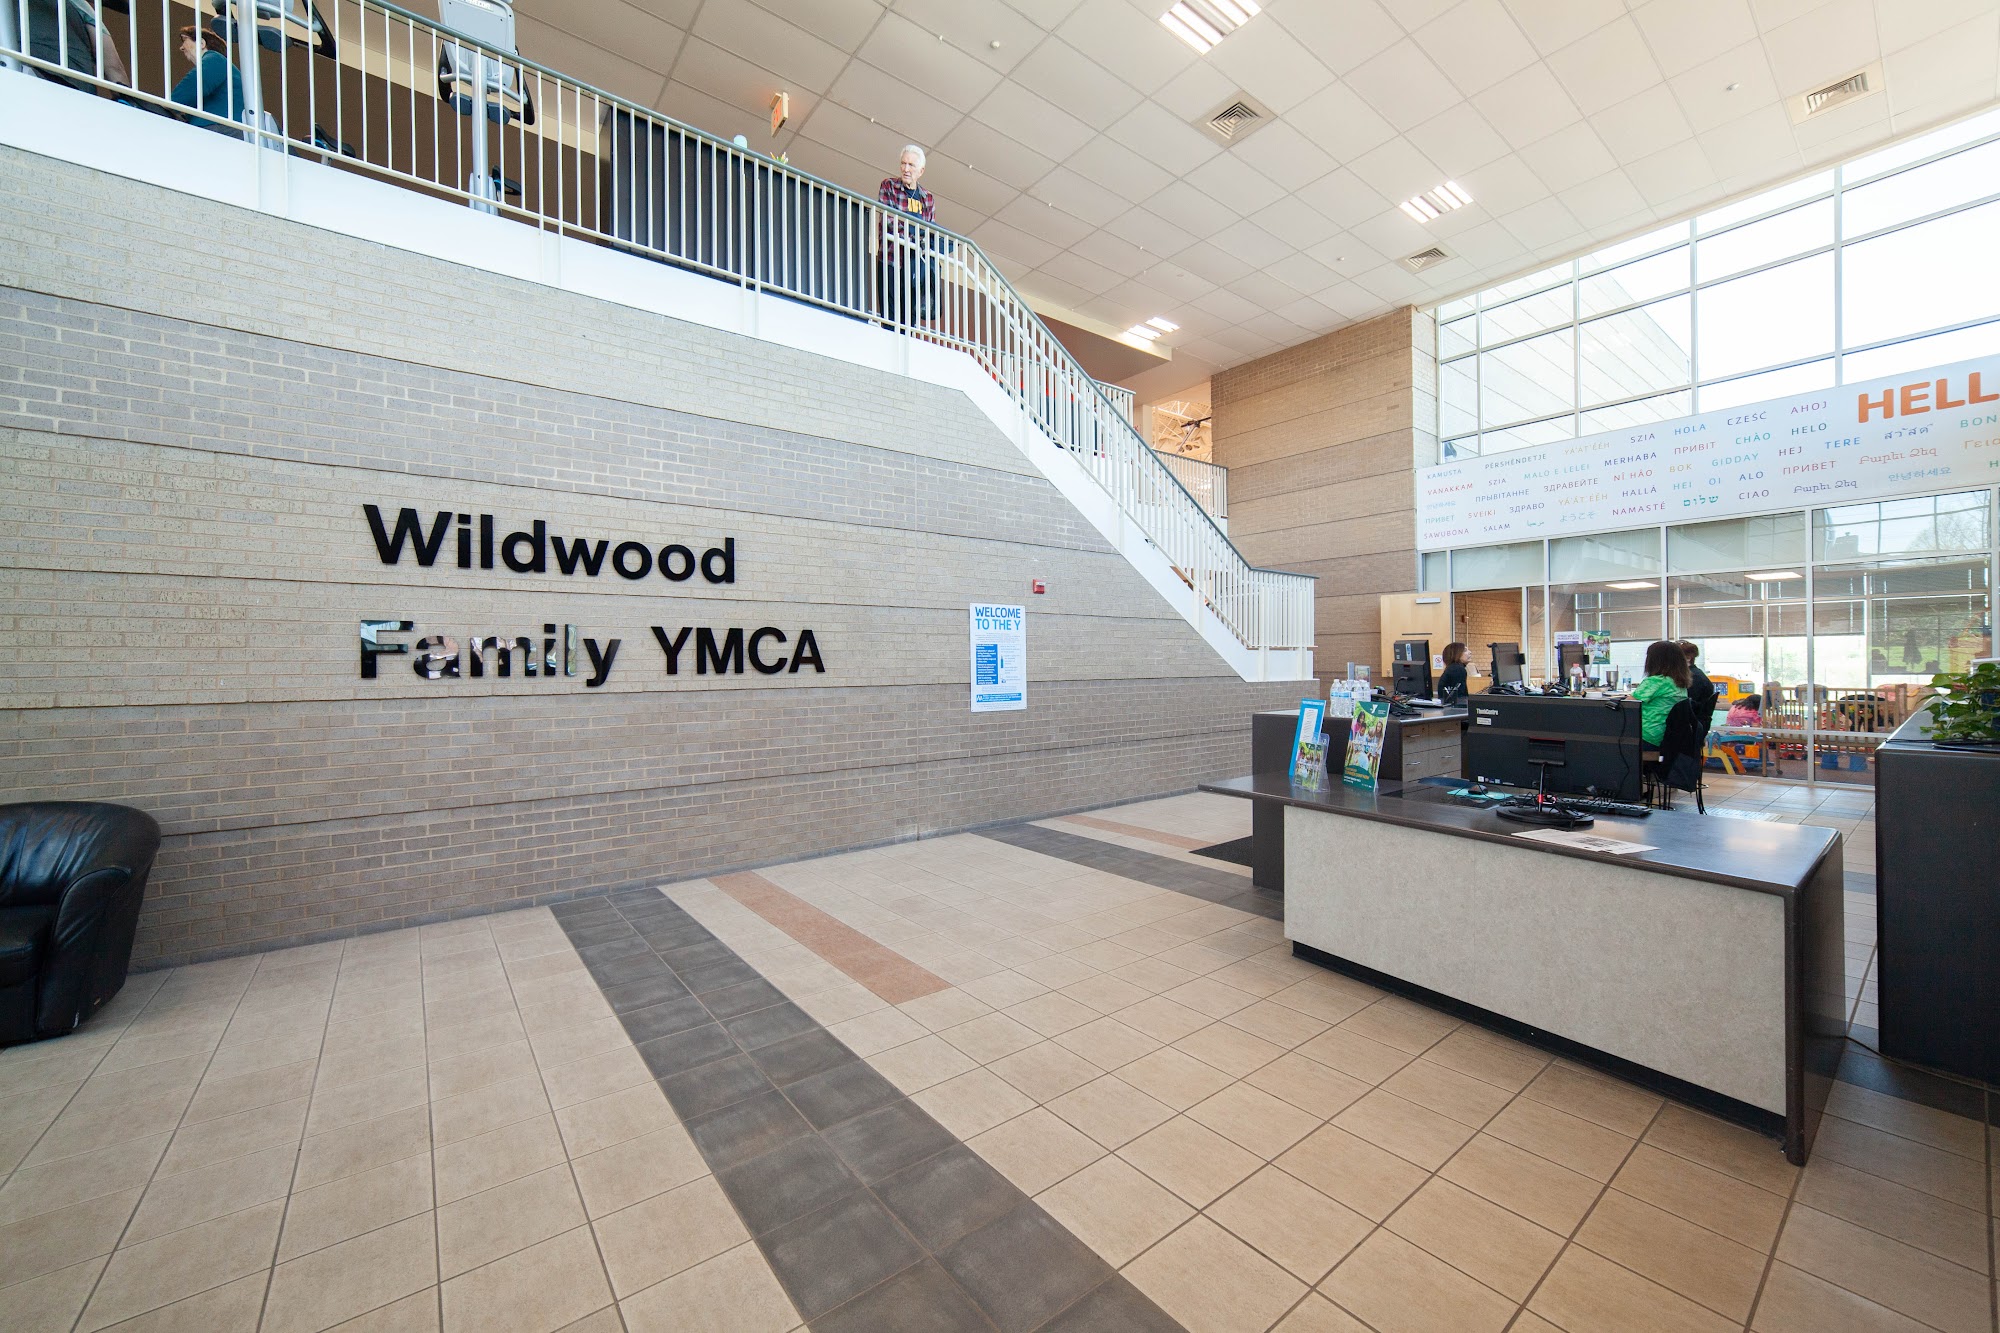 Wildwood YMCA 2641 MO-109, Wildwood Missouri 63040